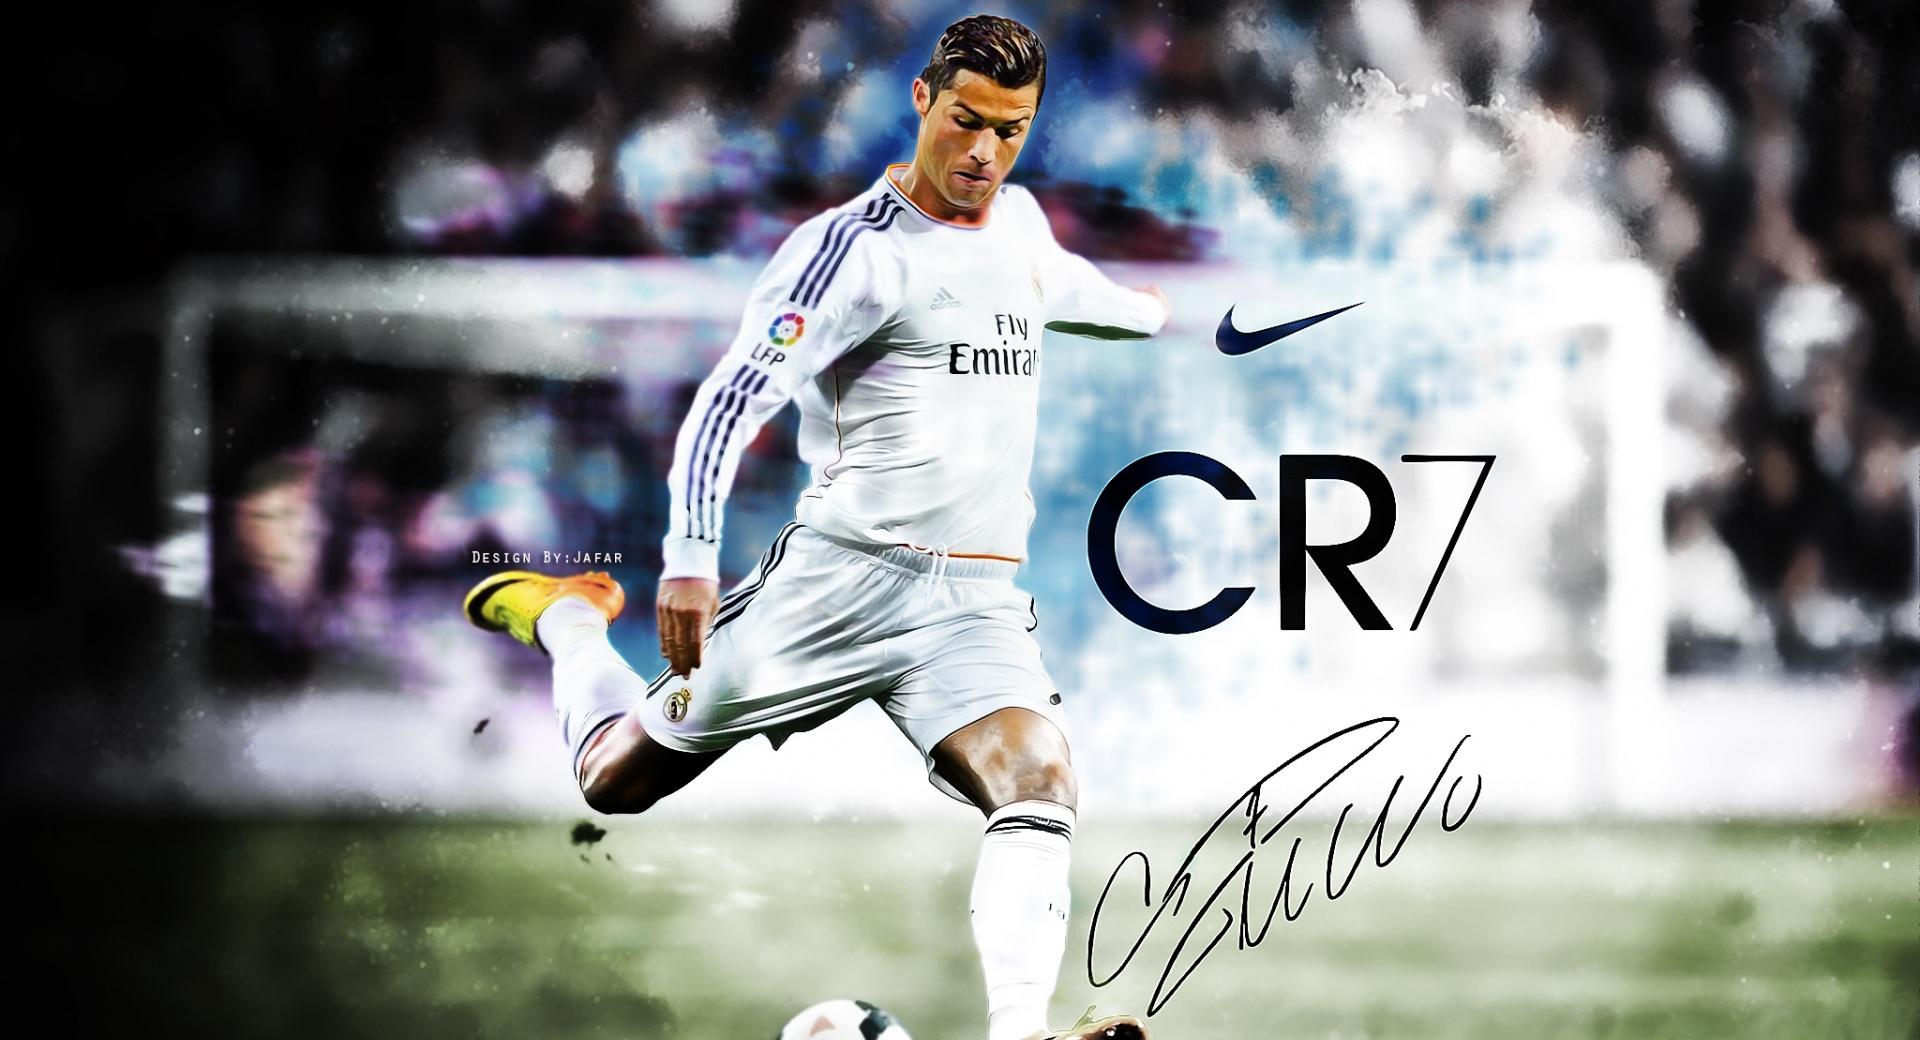 Cristiano Ronaldo Real Madrid Wallpaper 2014 at 1024 x 1024 iPad size wallpapers HD quality